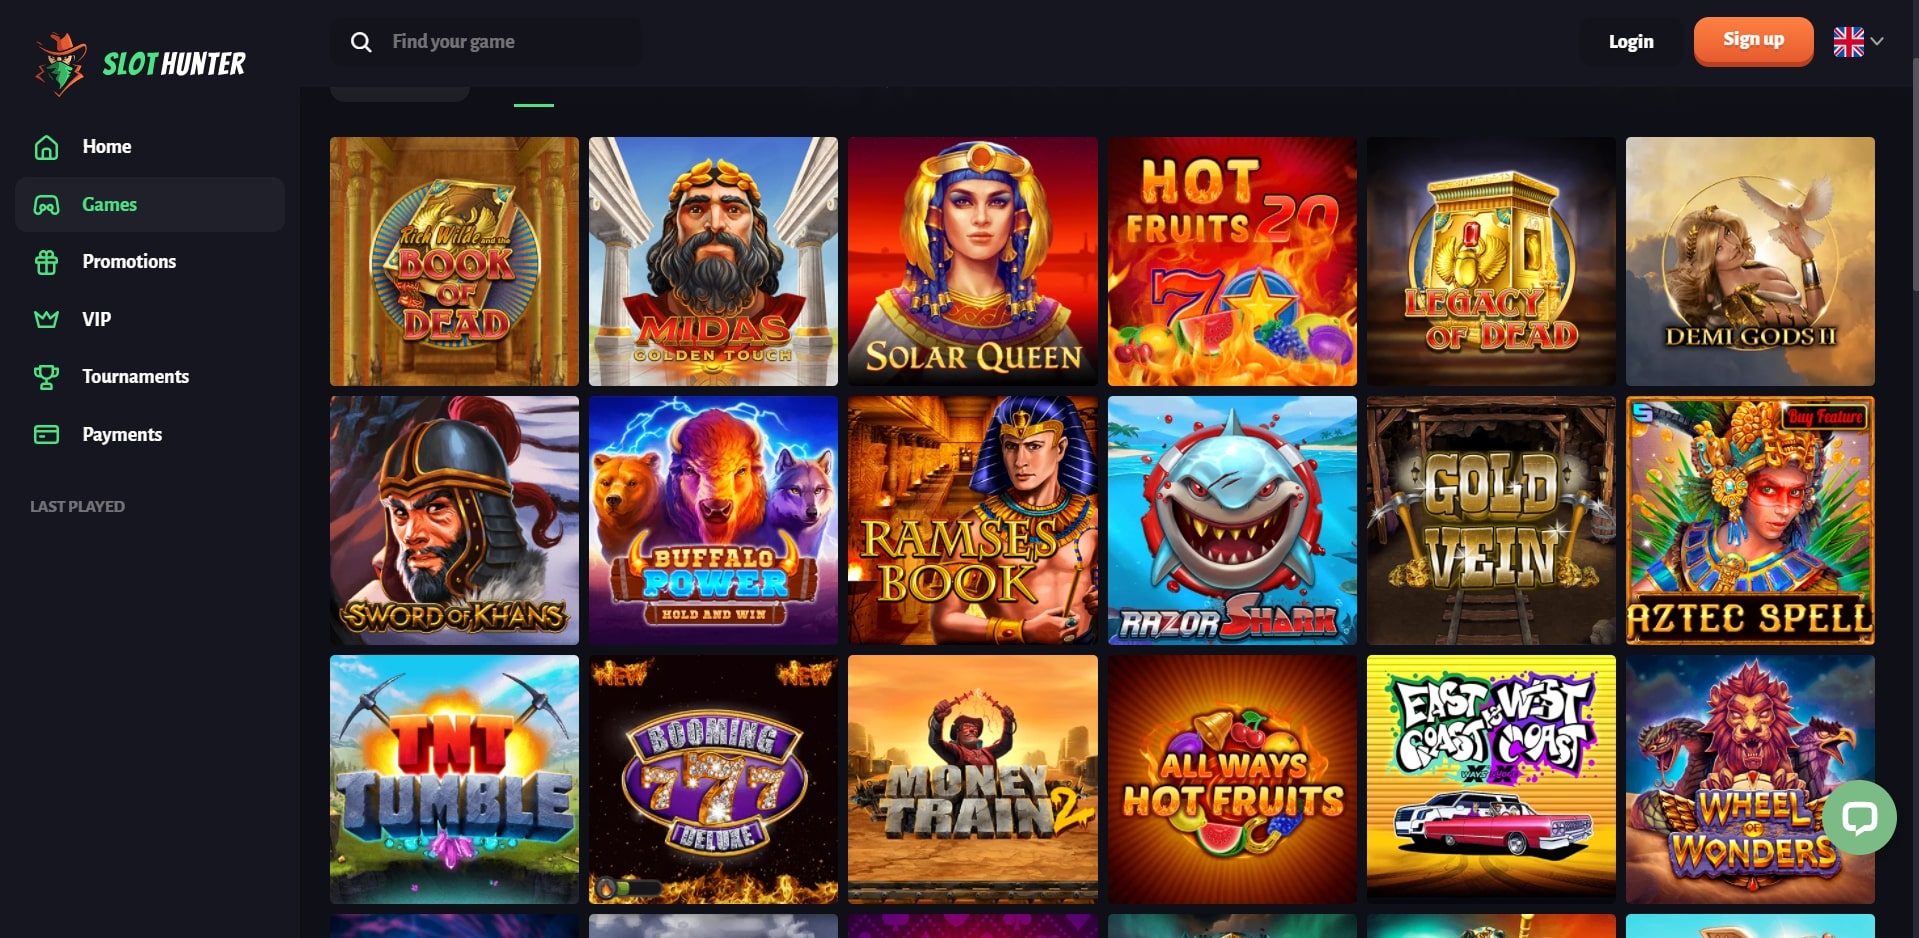 SlotHunter Casino Games